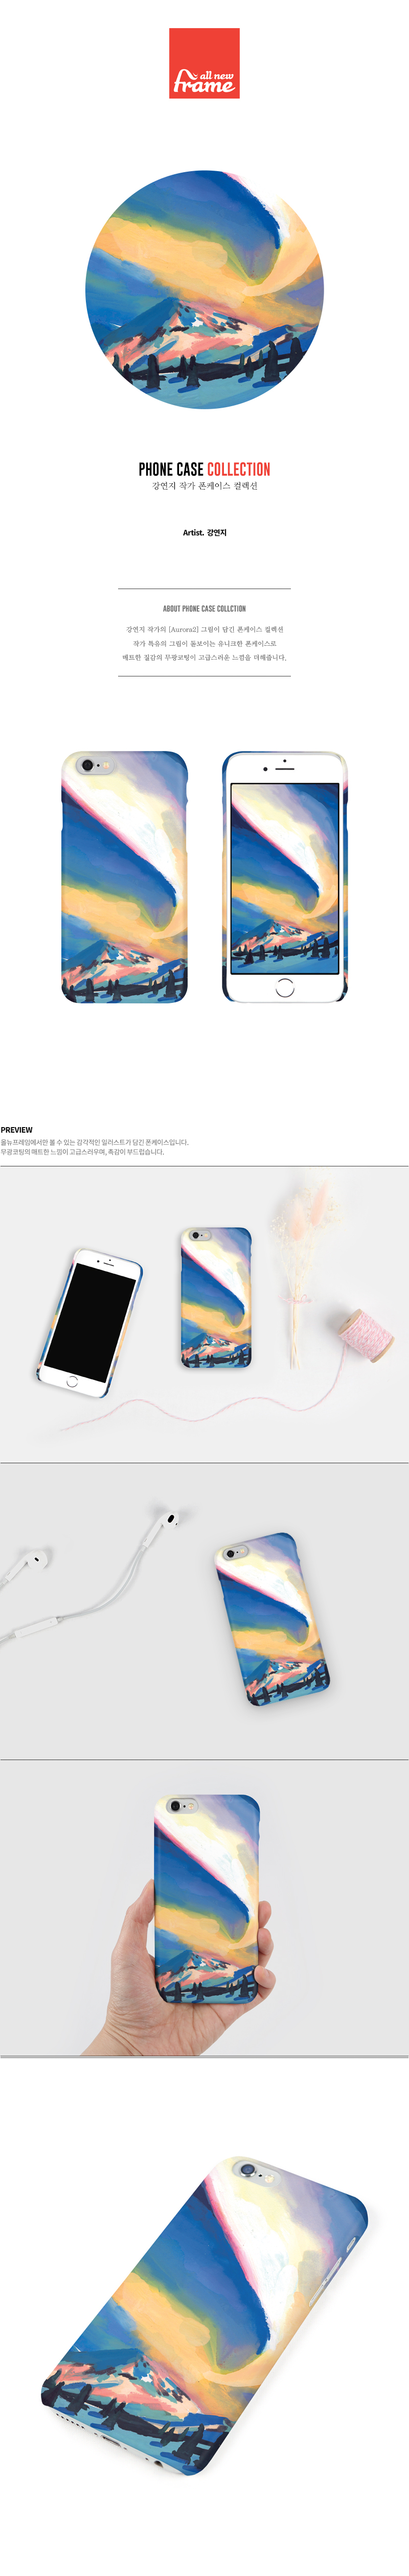 (Phone Case) Aurora 2 22,000원 - 올뉴프레임 디지털, 모바일 액세서리, 휴대폰 케이스, 애플 바보사랑 (Phone Case) Aurora 2 22,000원 - 올뉴프레임 디지털, 모바일 액세서리, 휴대폰 케이스, 애플 바보사랑